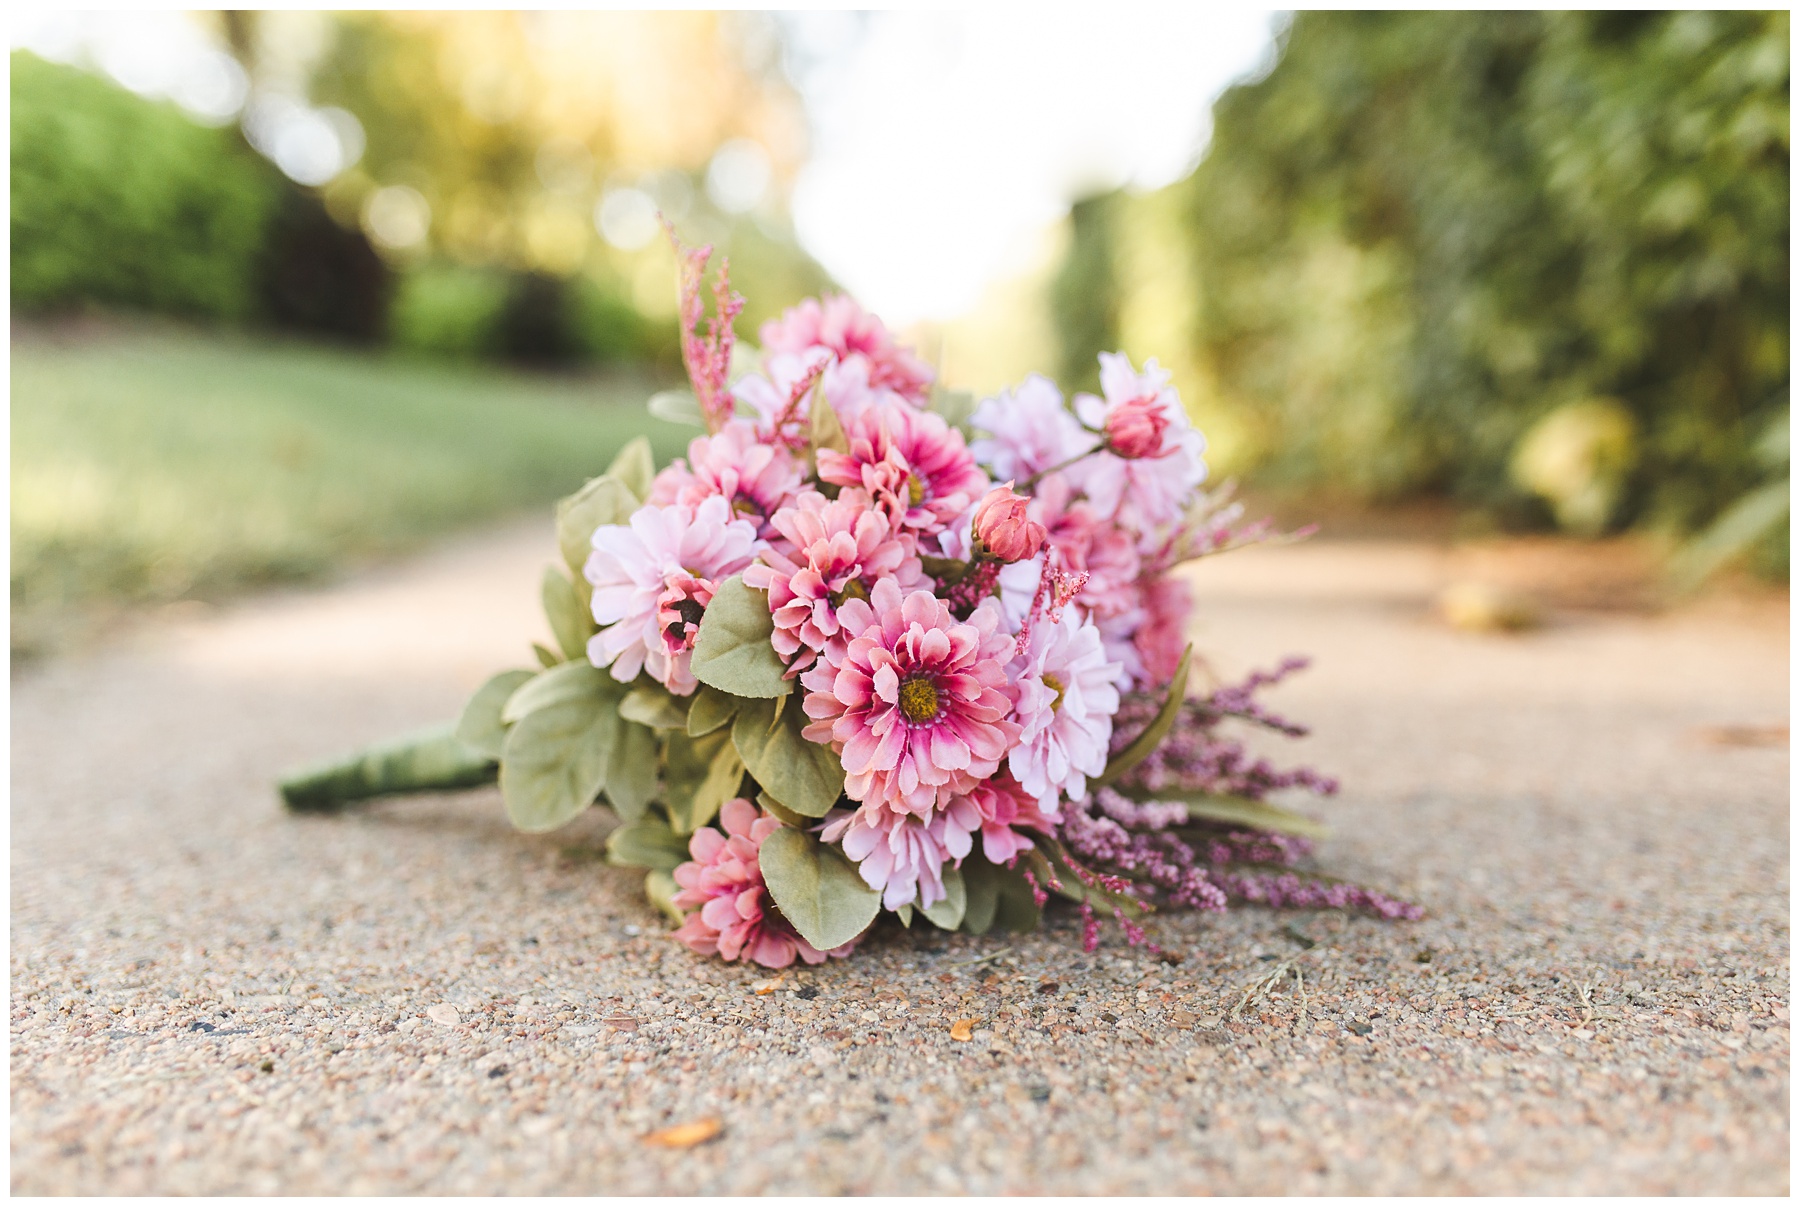 Bouquet on a path